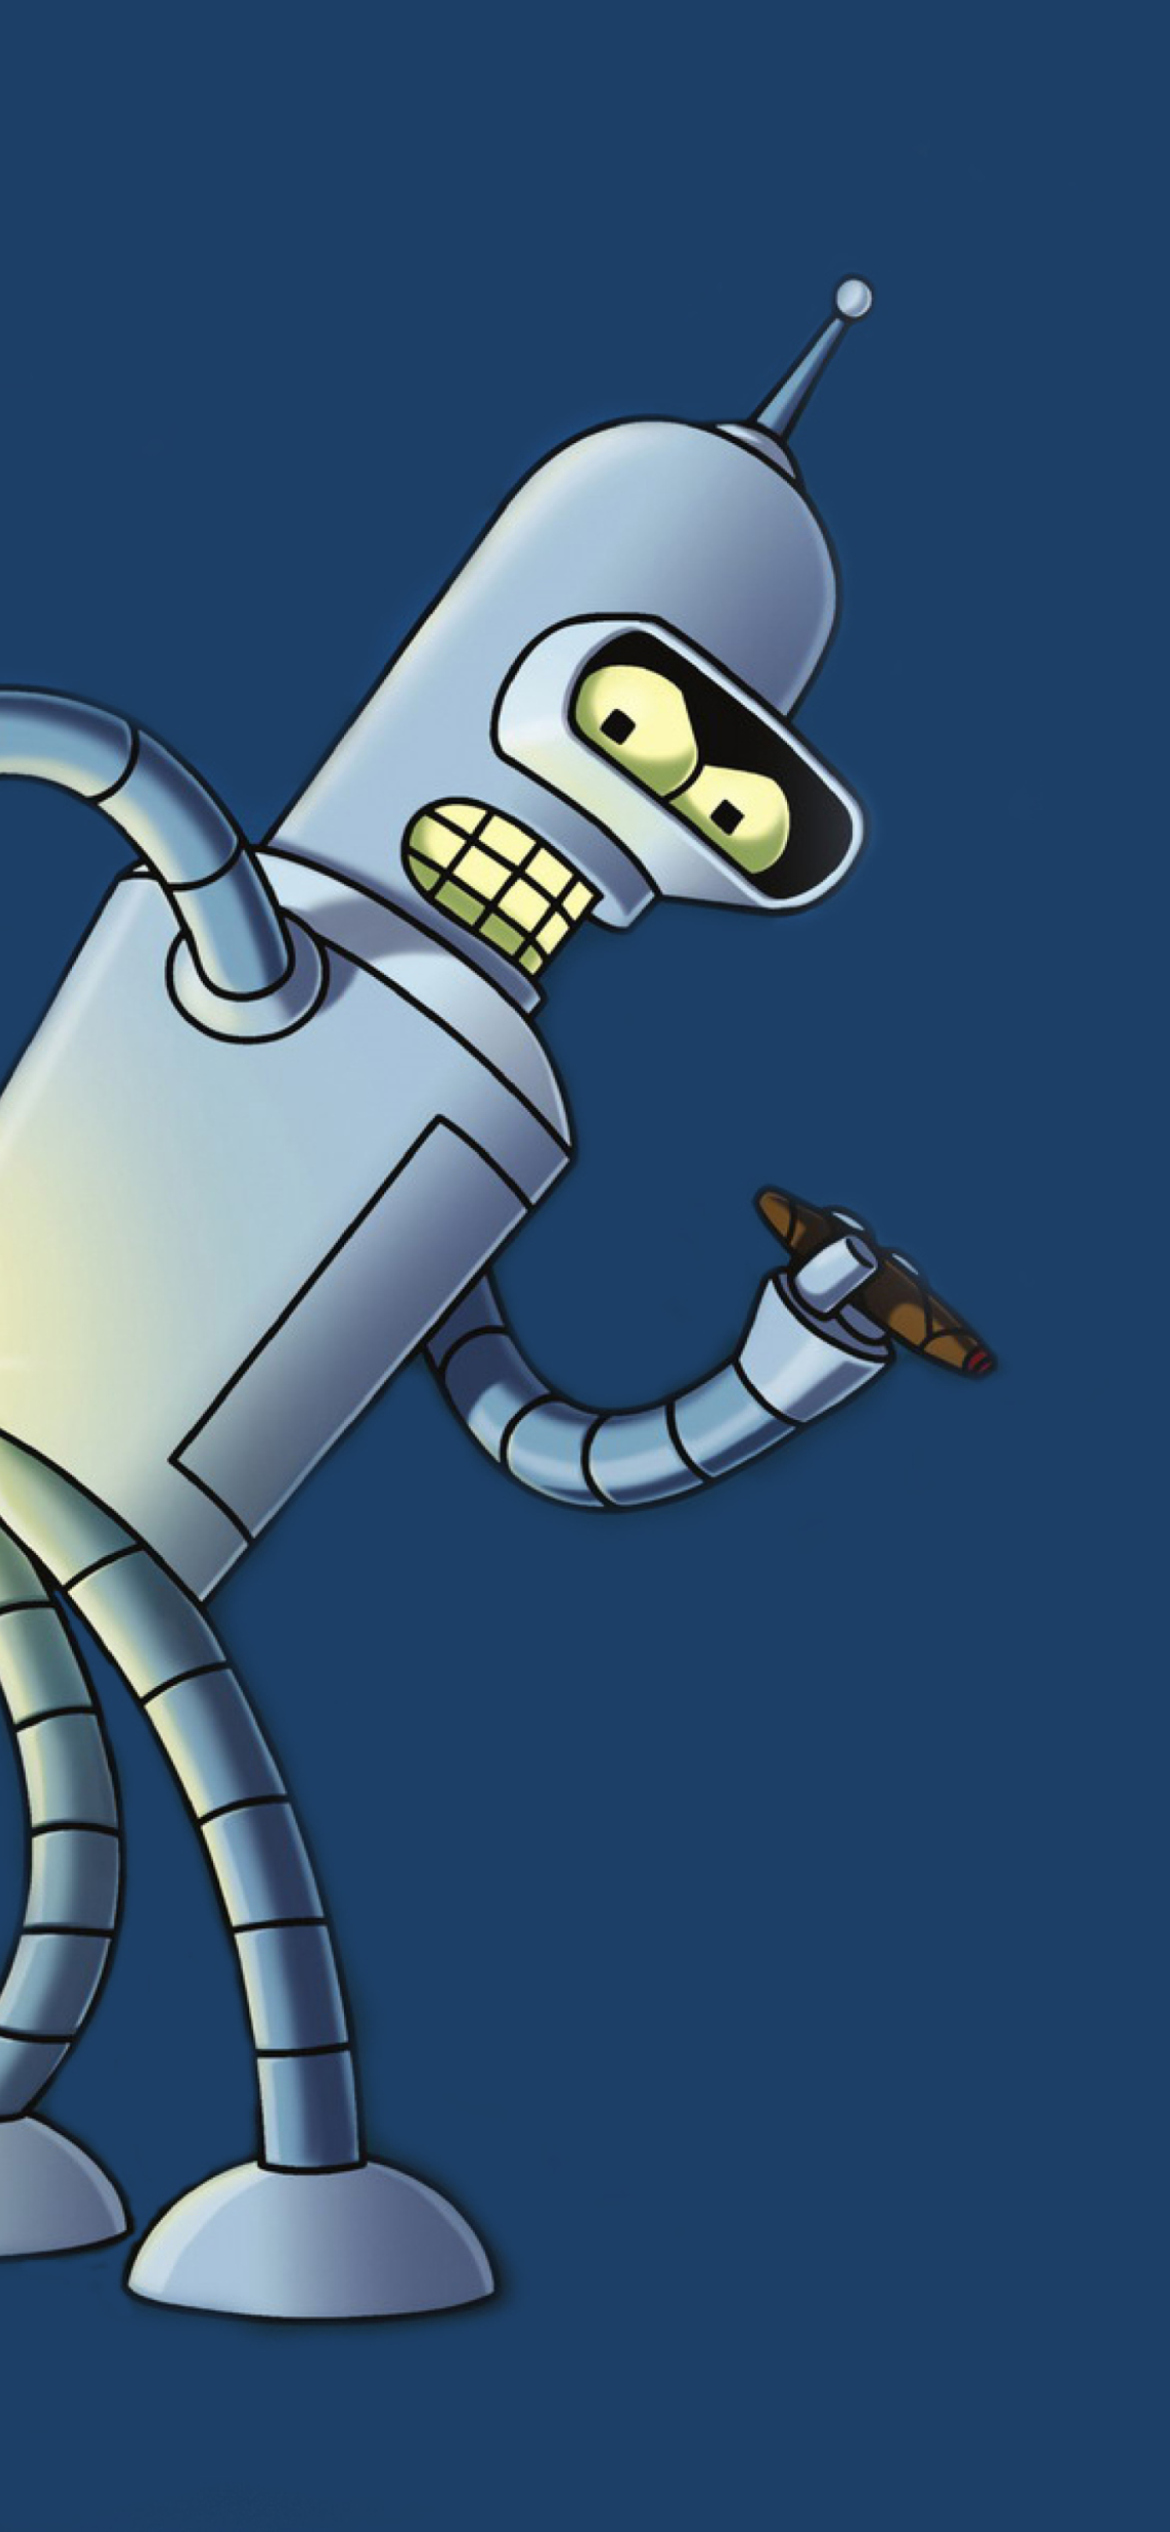 Bender Bending Rodriguez - Fondos de pantalla gratis para iPhone 11